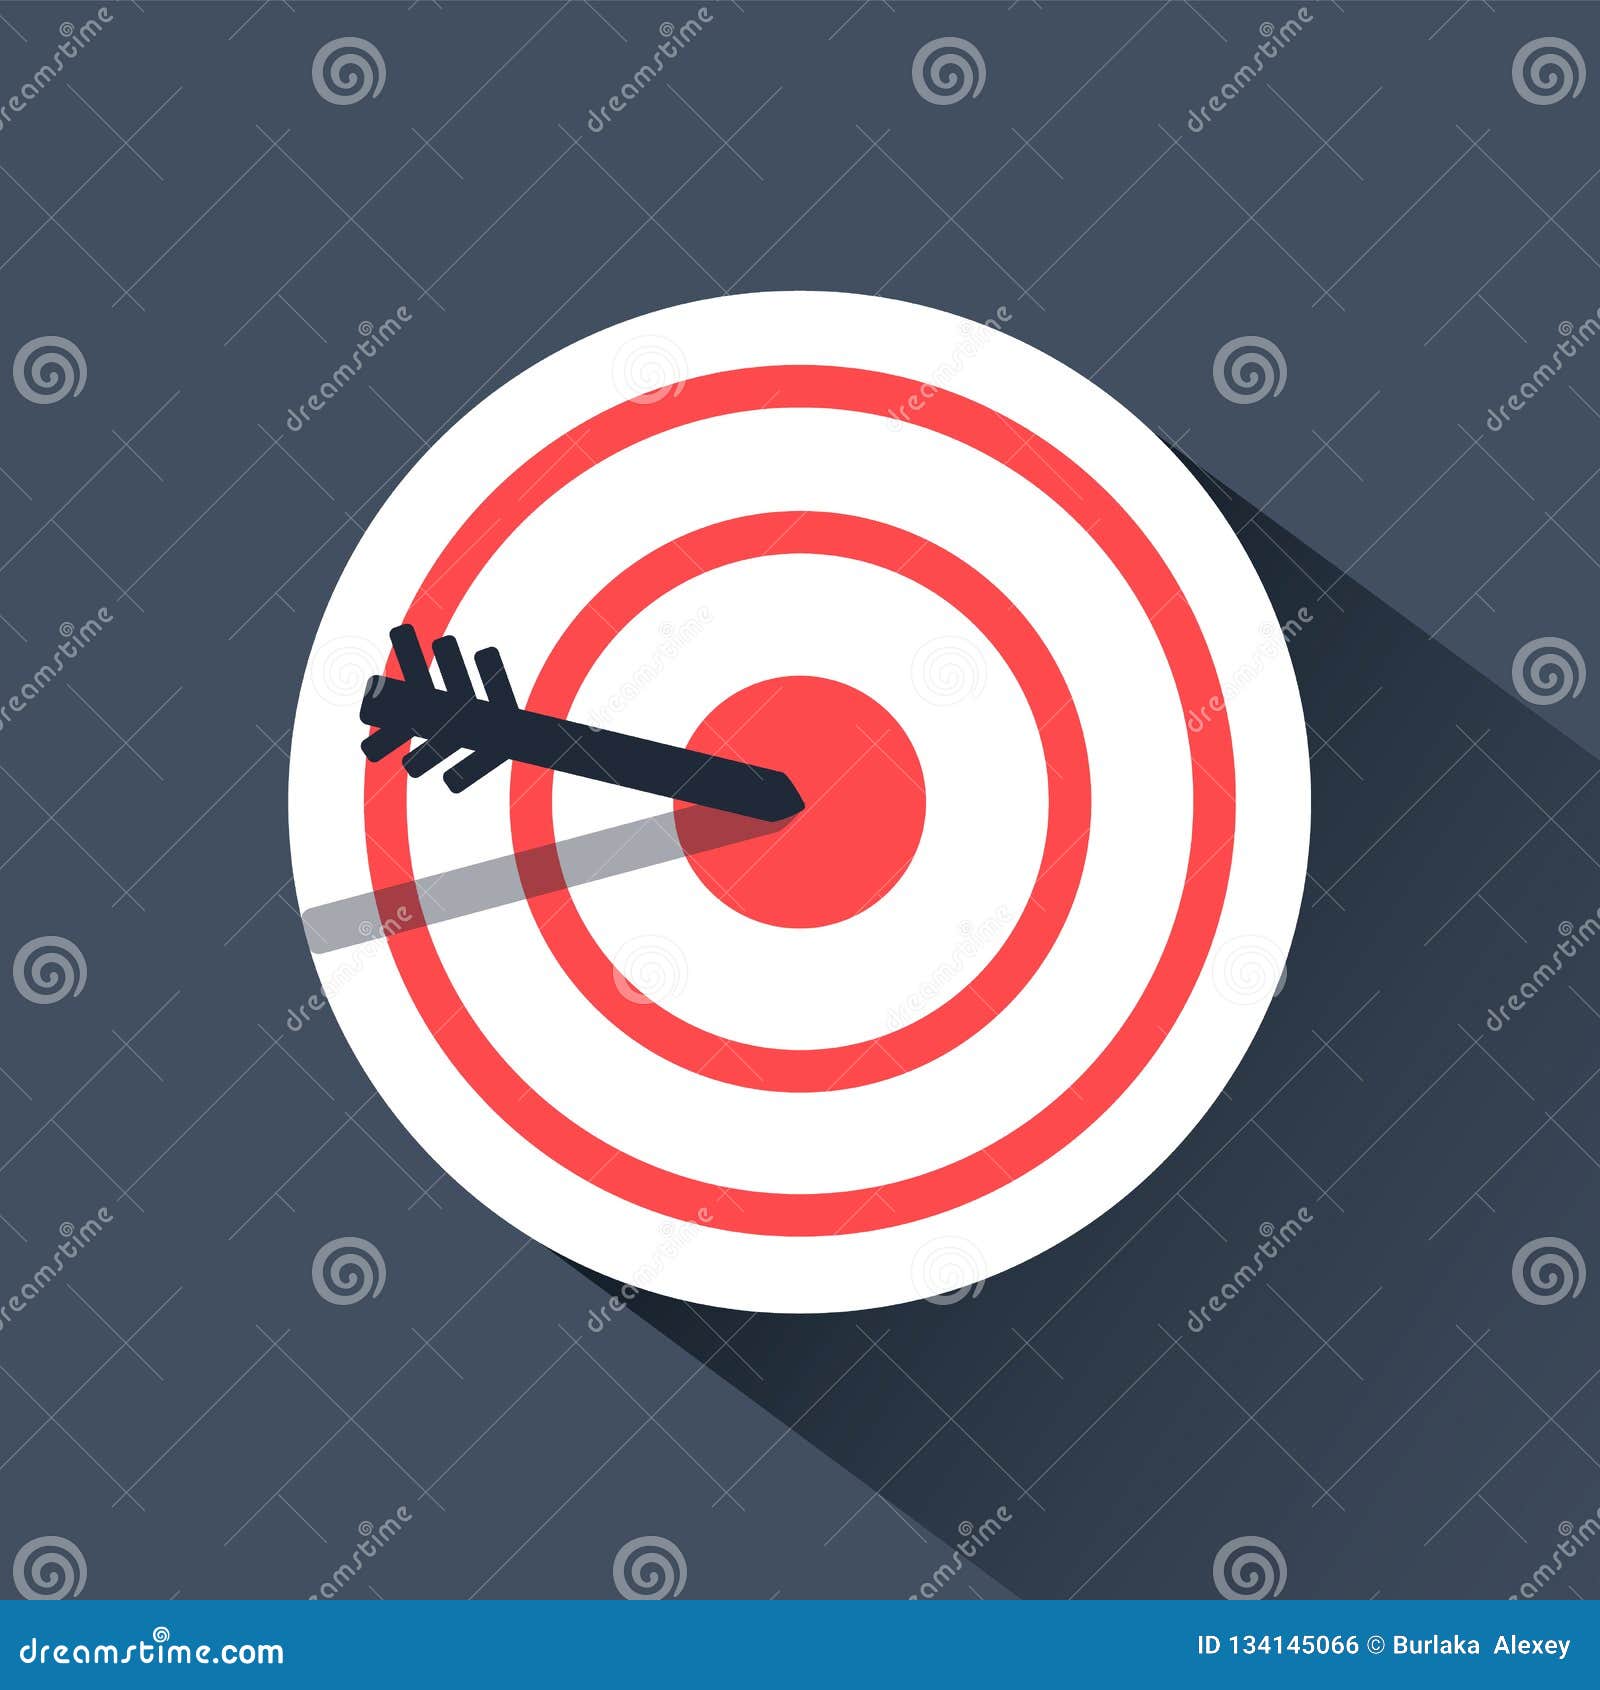 bulls eye icon. archery flat infographic 